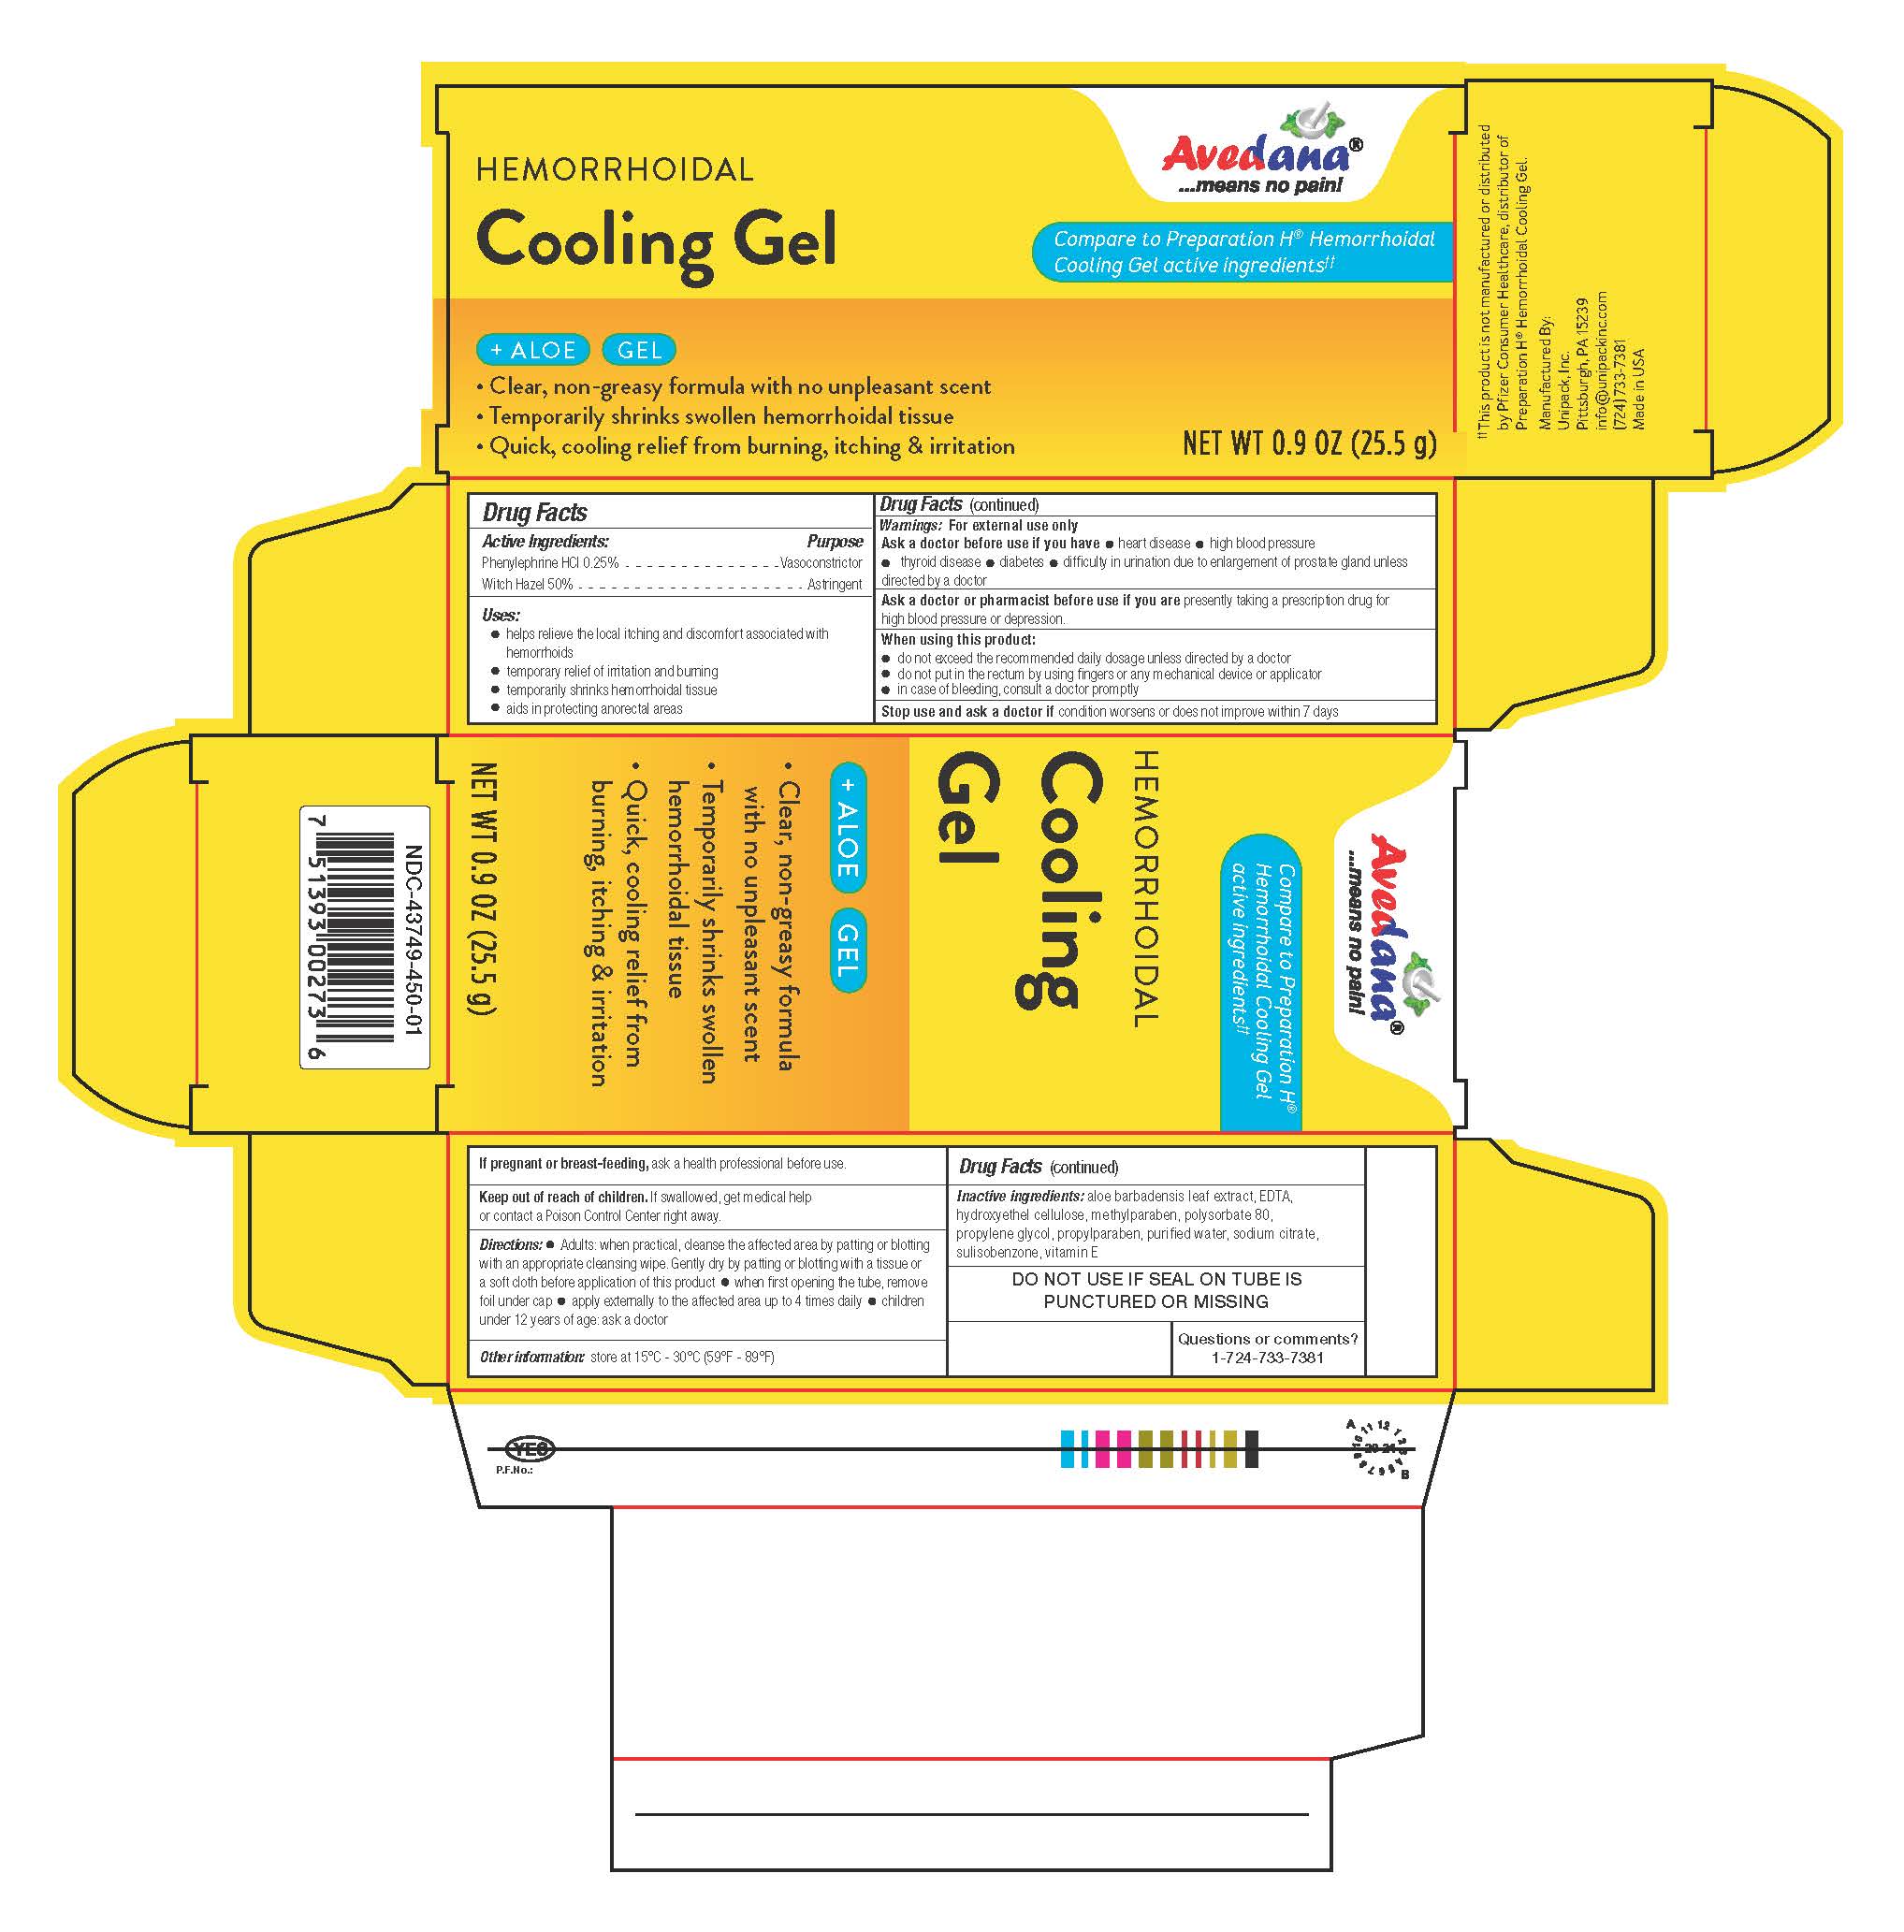 PRINCIPAL DISPLAY PANEL - 25.5 g Carton Label